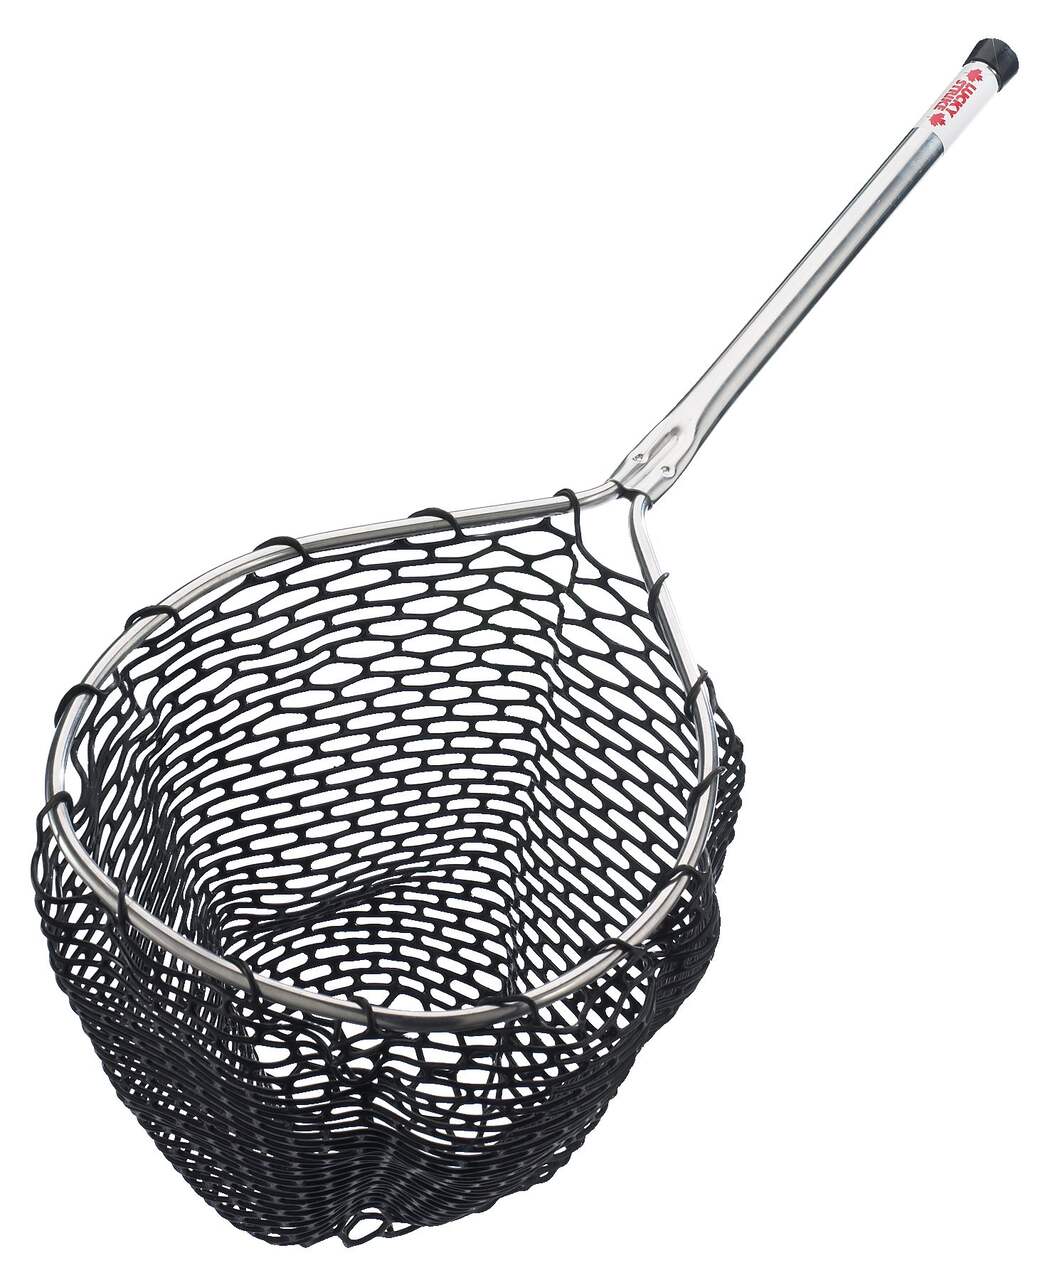 Lucky Strike Bait Works B2 18-30 inch Telescopic Basket Fishing Net